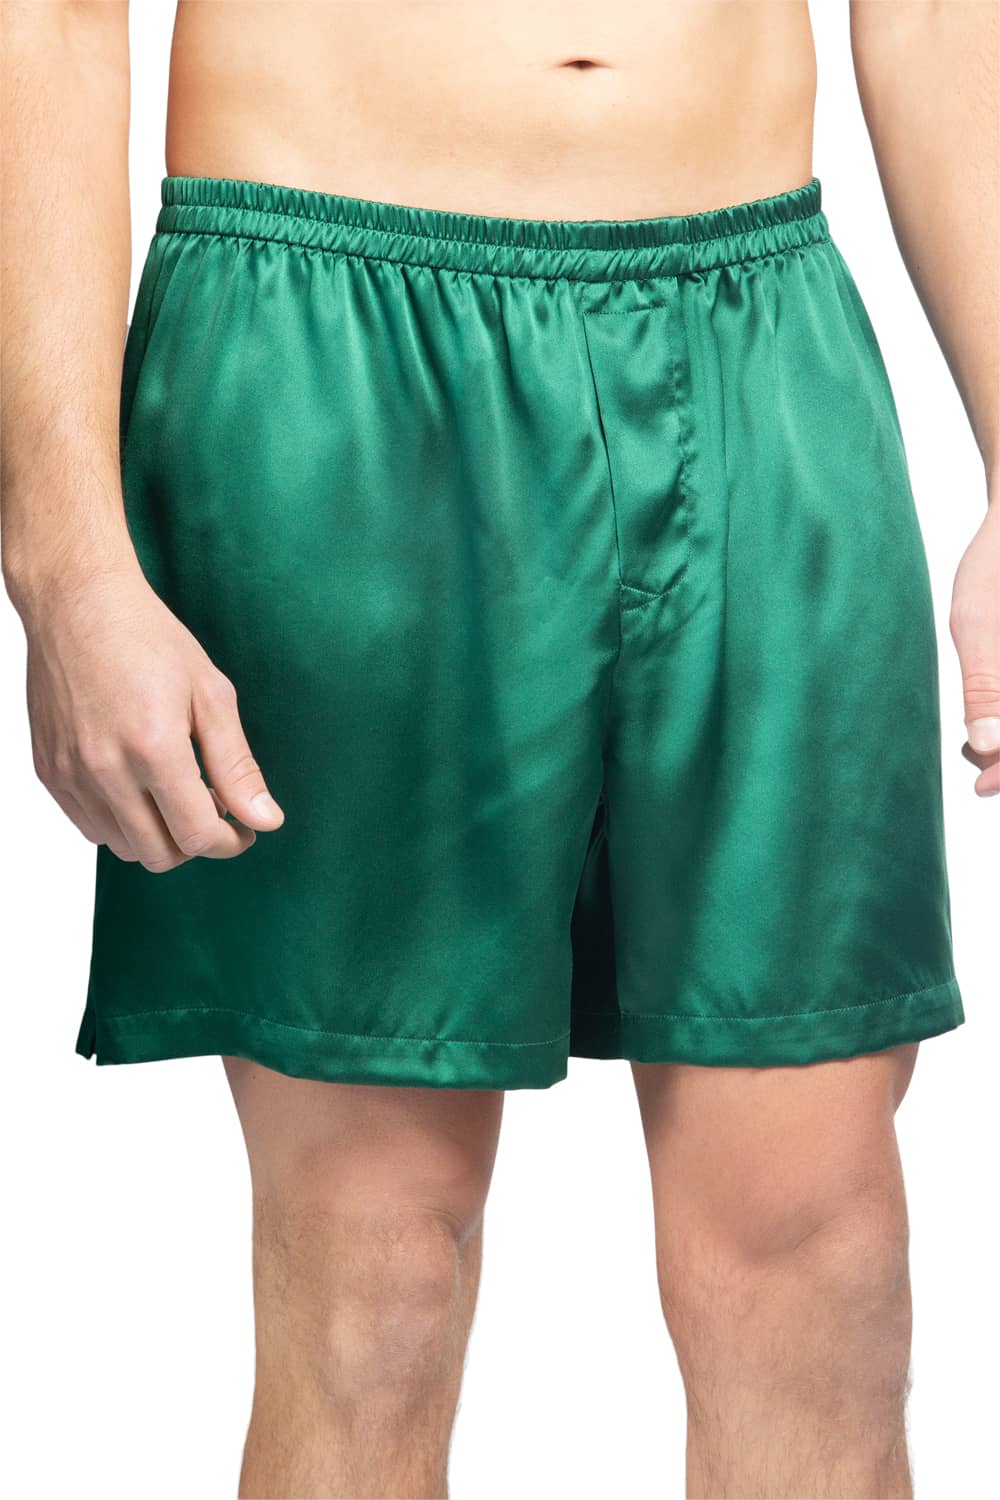 silk shorts mens